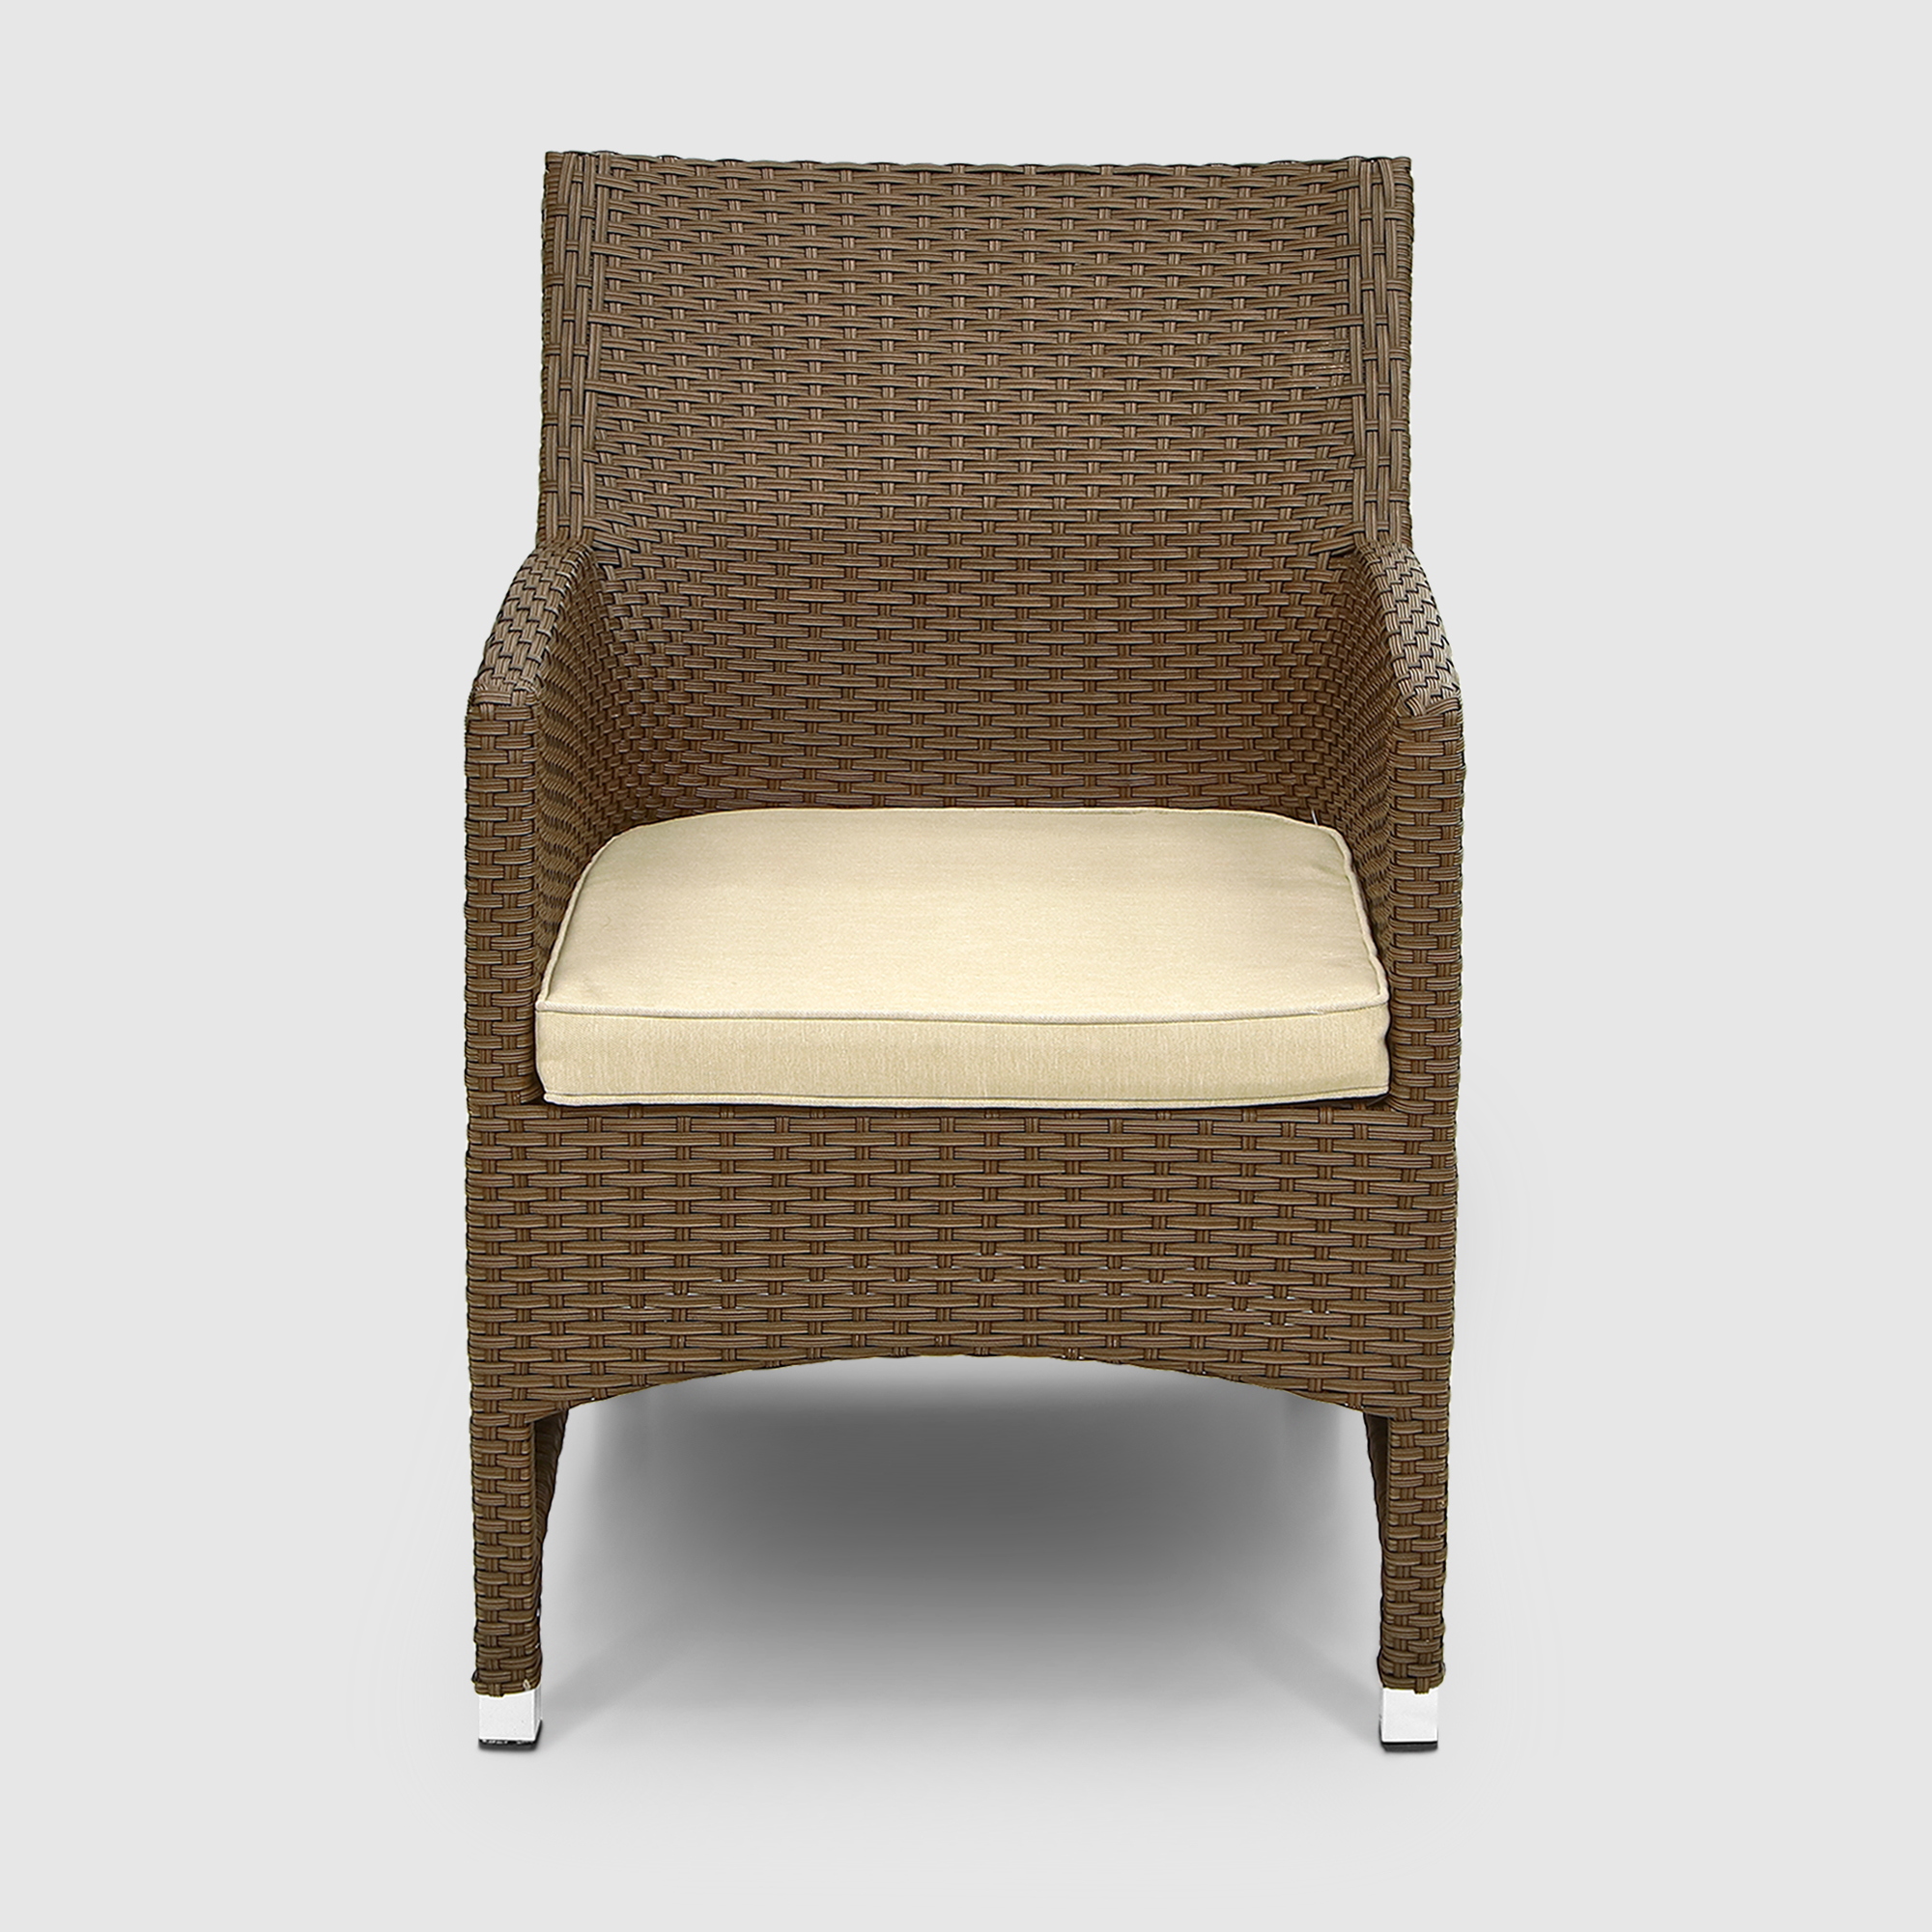 Комплект мебели NS RATTAN/MAVI 9 предметов (141-8tch), цвет коричневый, размер 57х57х85 см - фото 5